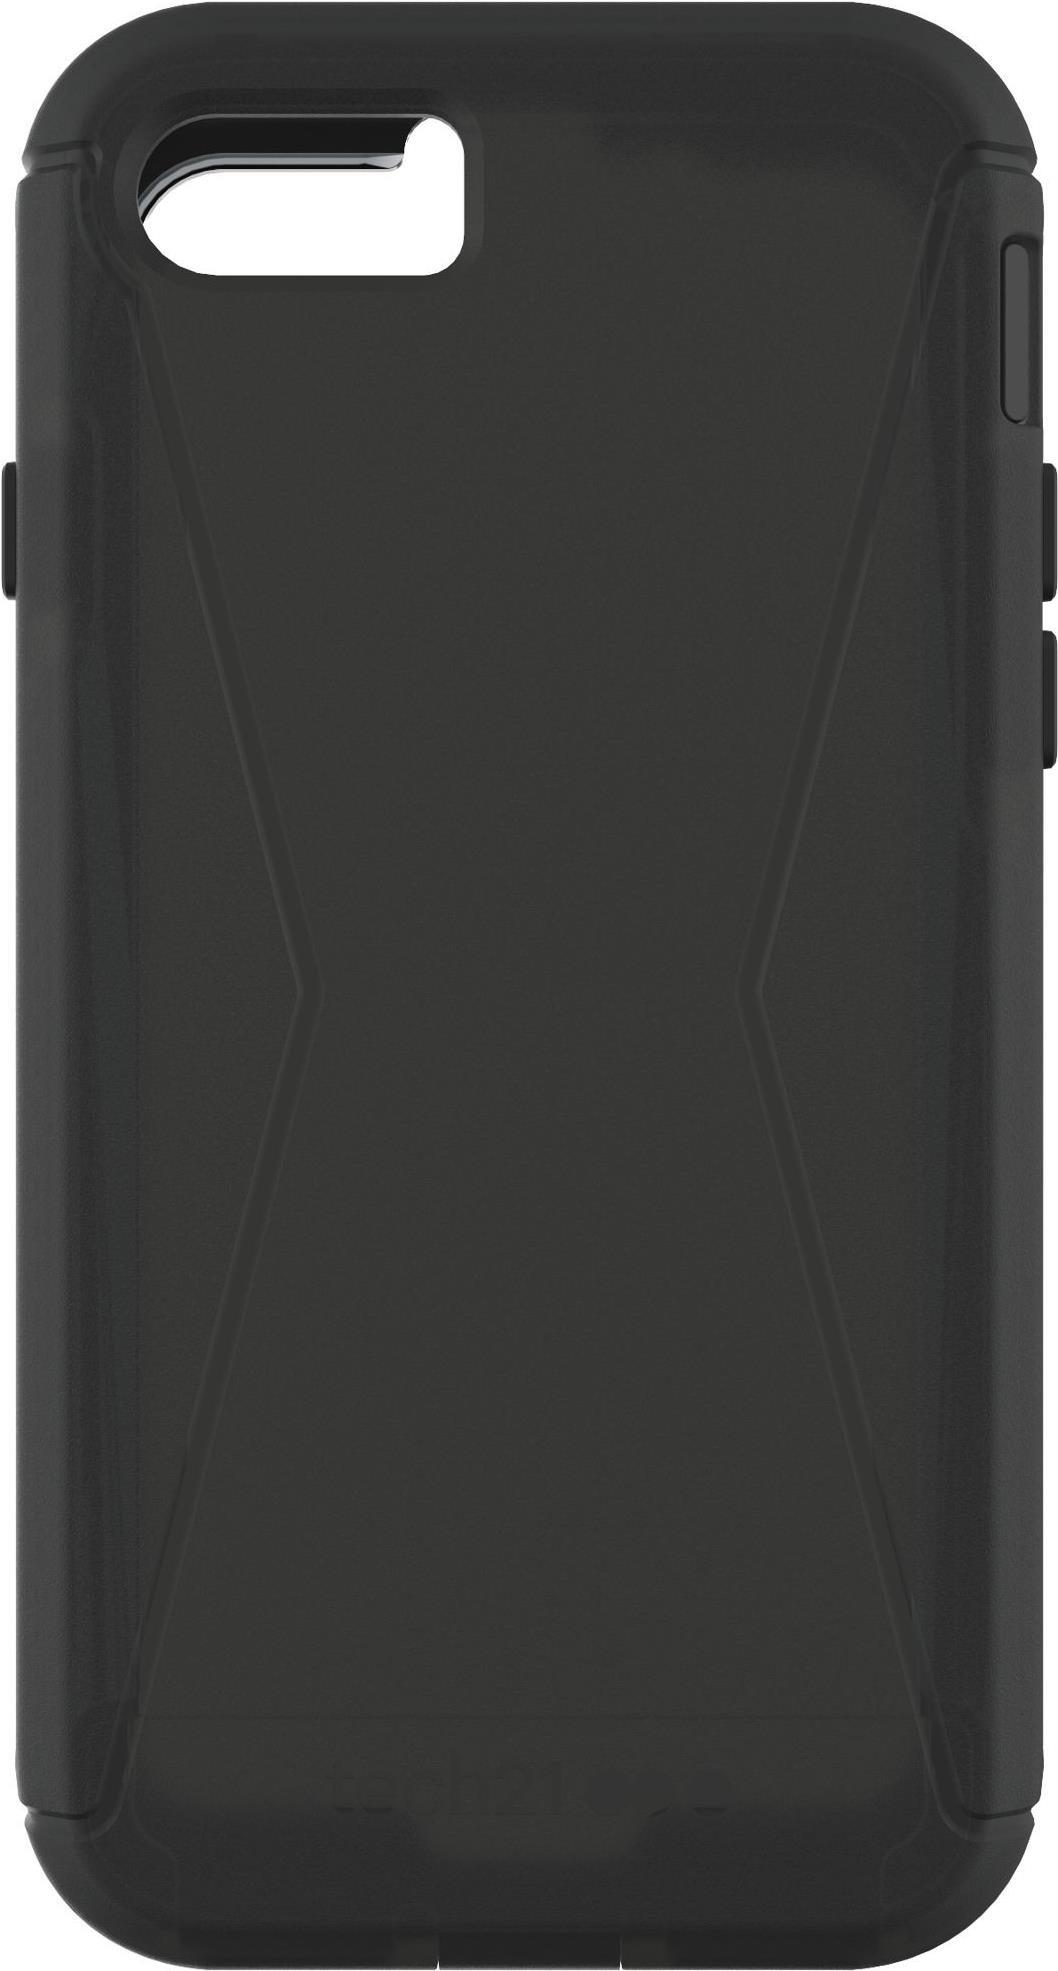 Tech21 T21-5333 Evo Tactical Extreme Edition Case + Holster FlexShock für Apple iPhone 7/8 schwarz (T21-5333)